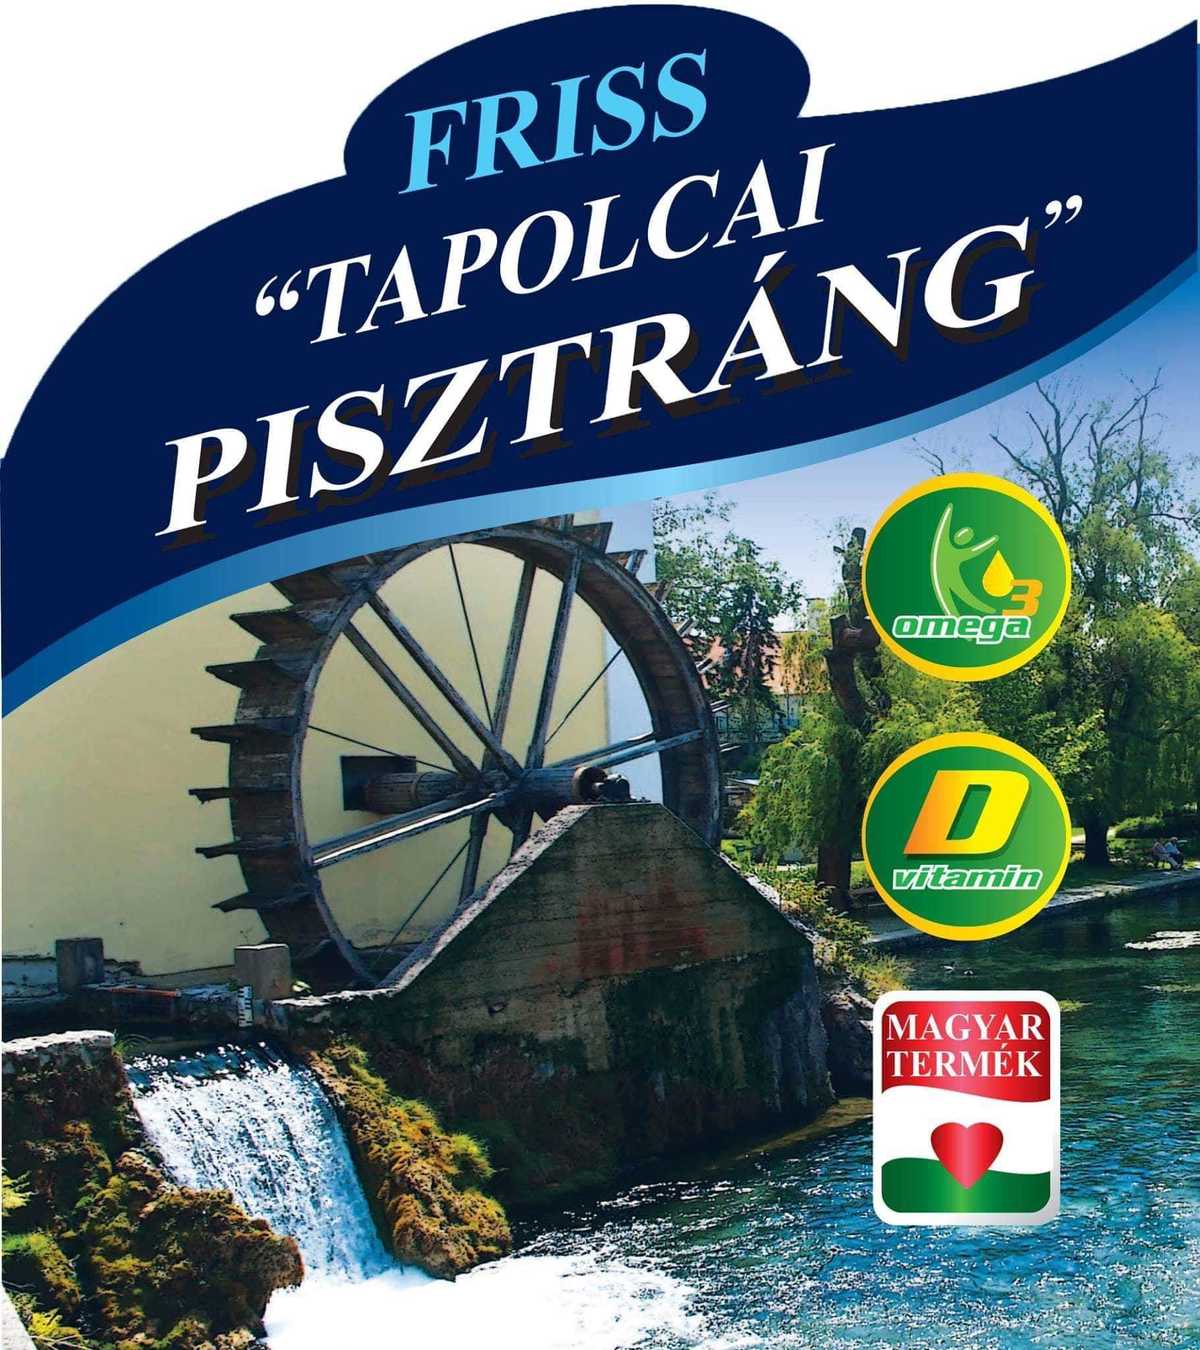 pisztrang_logo